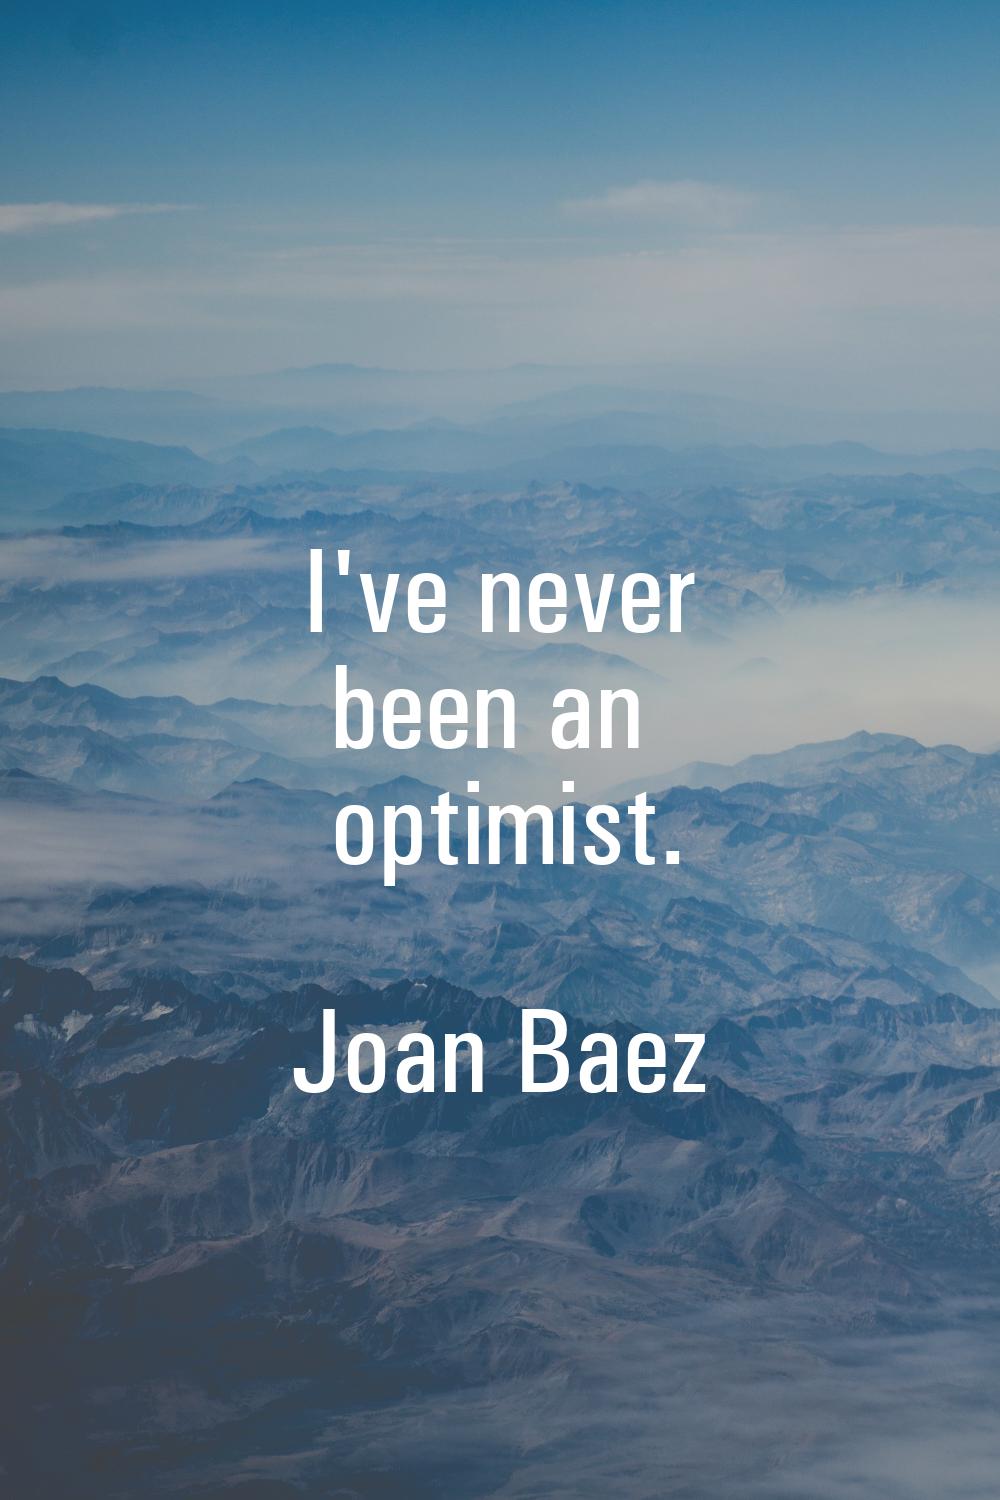 I've never been an optimist.